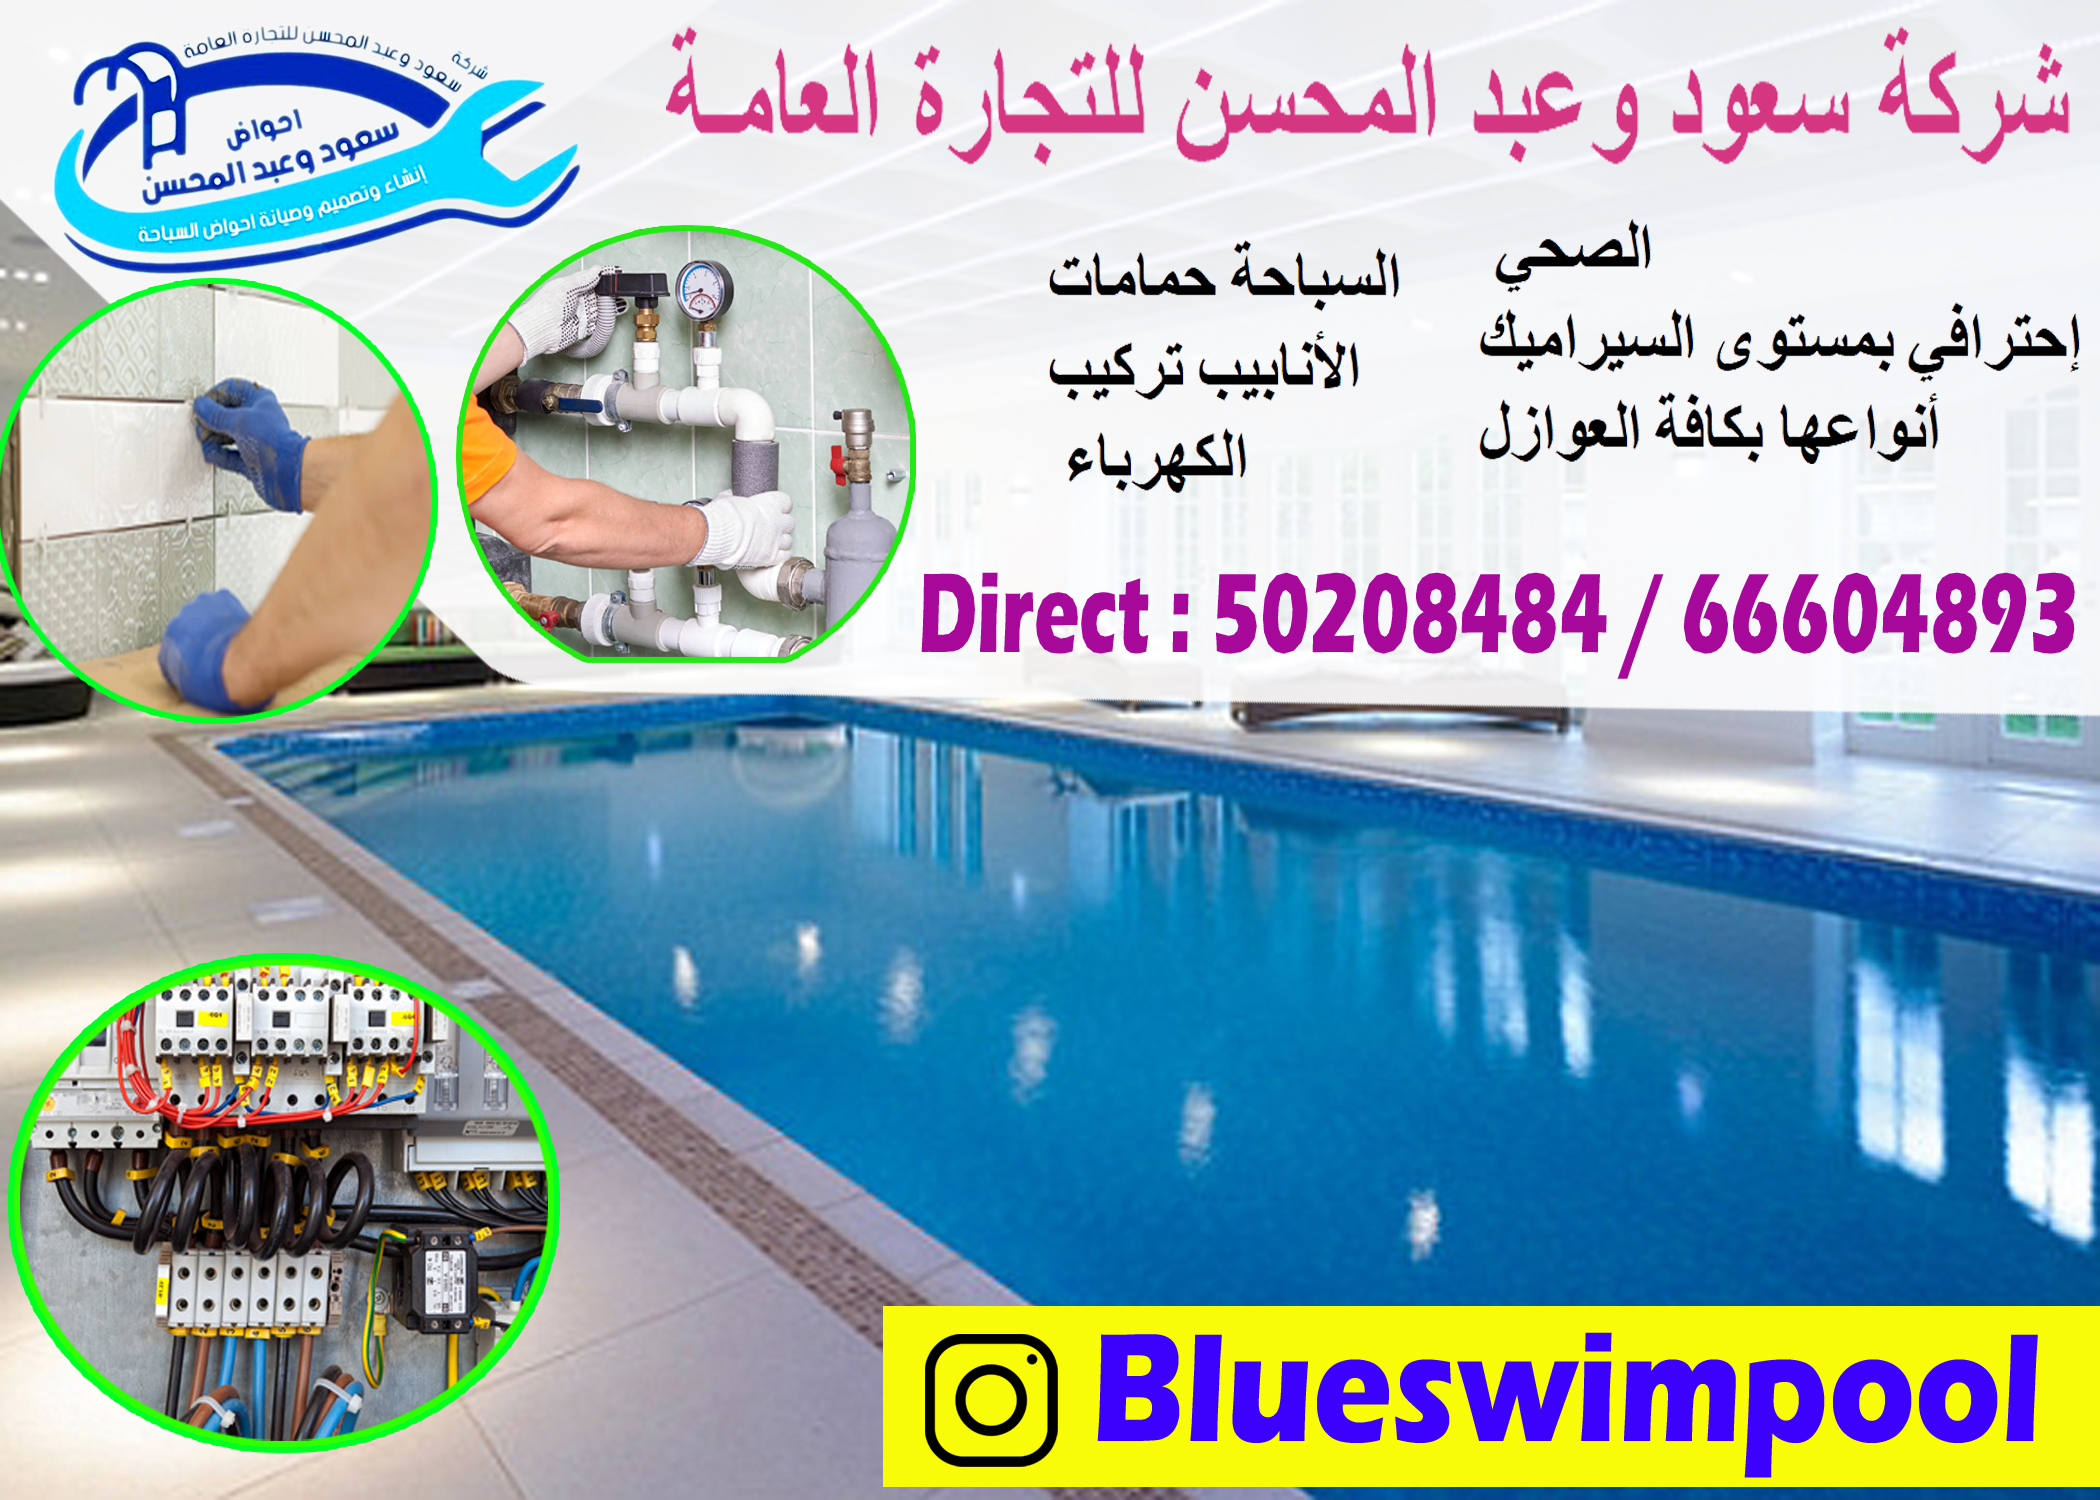 swimming pool service in kuwait